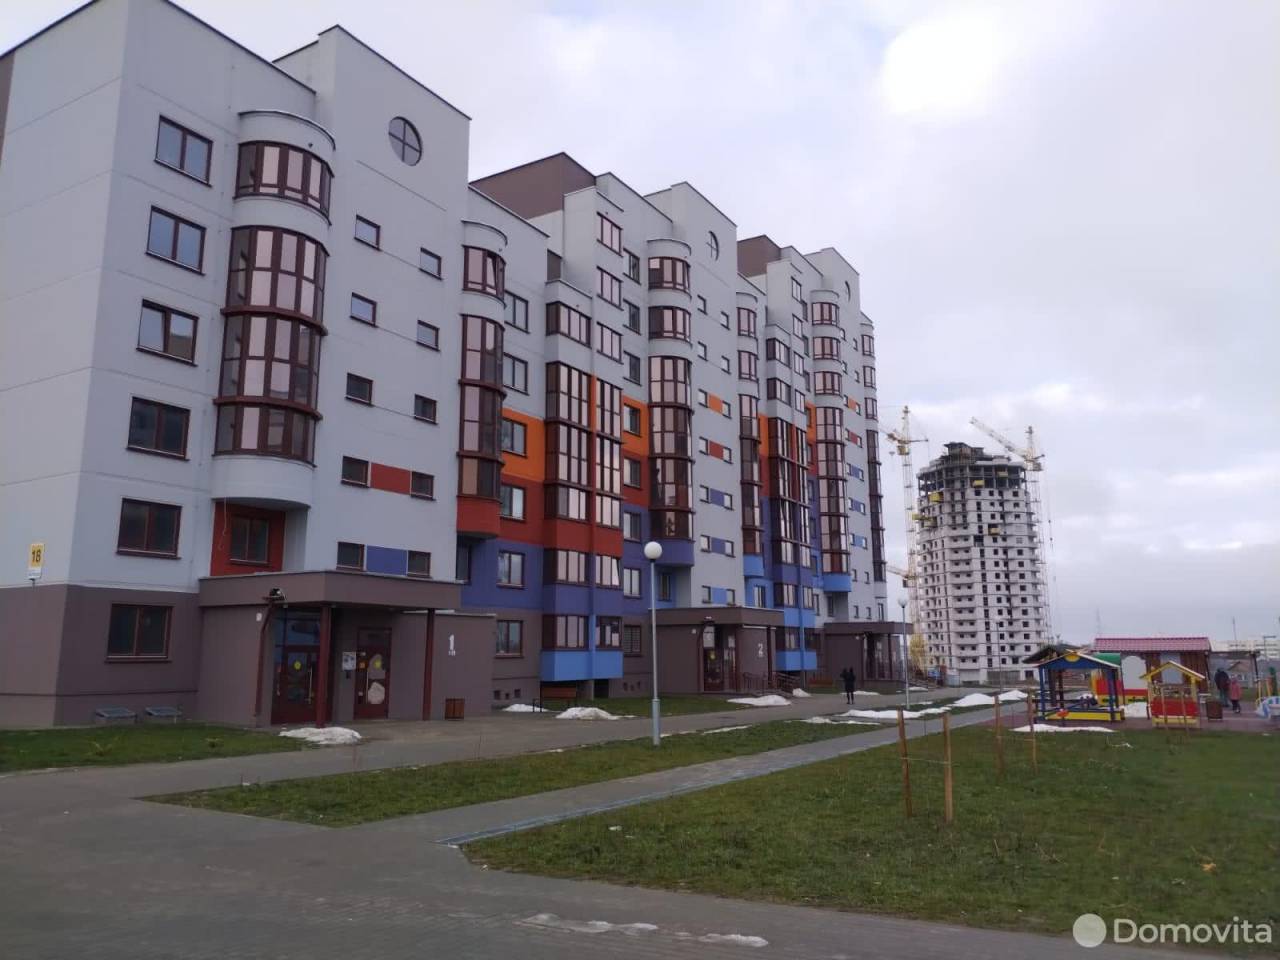 Цена на квартиры в Гродно упала, но не сильно